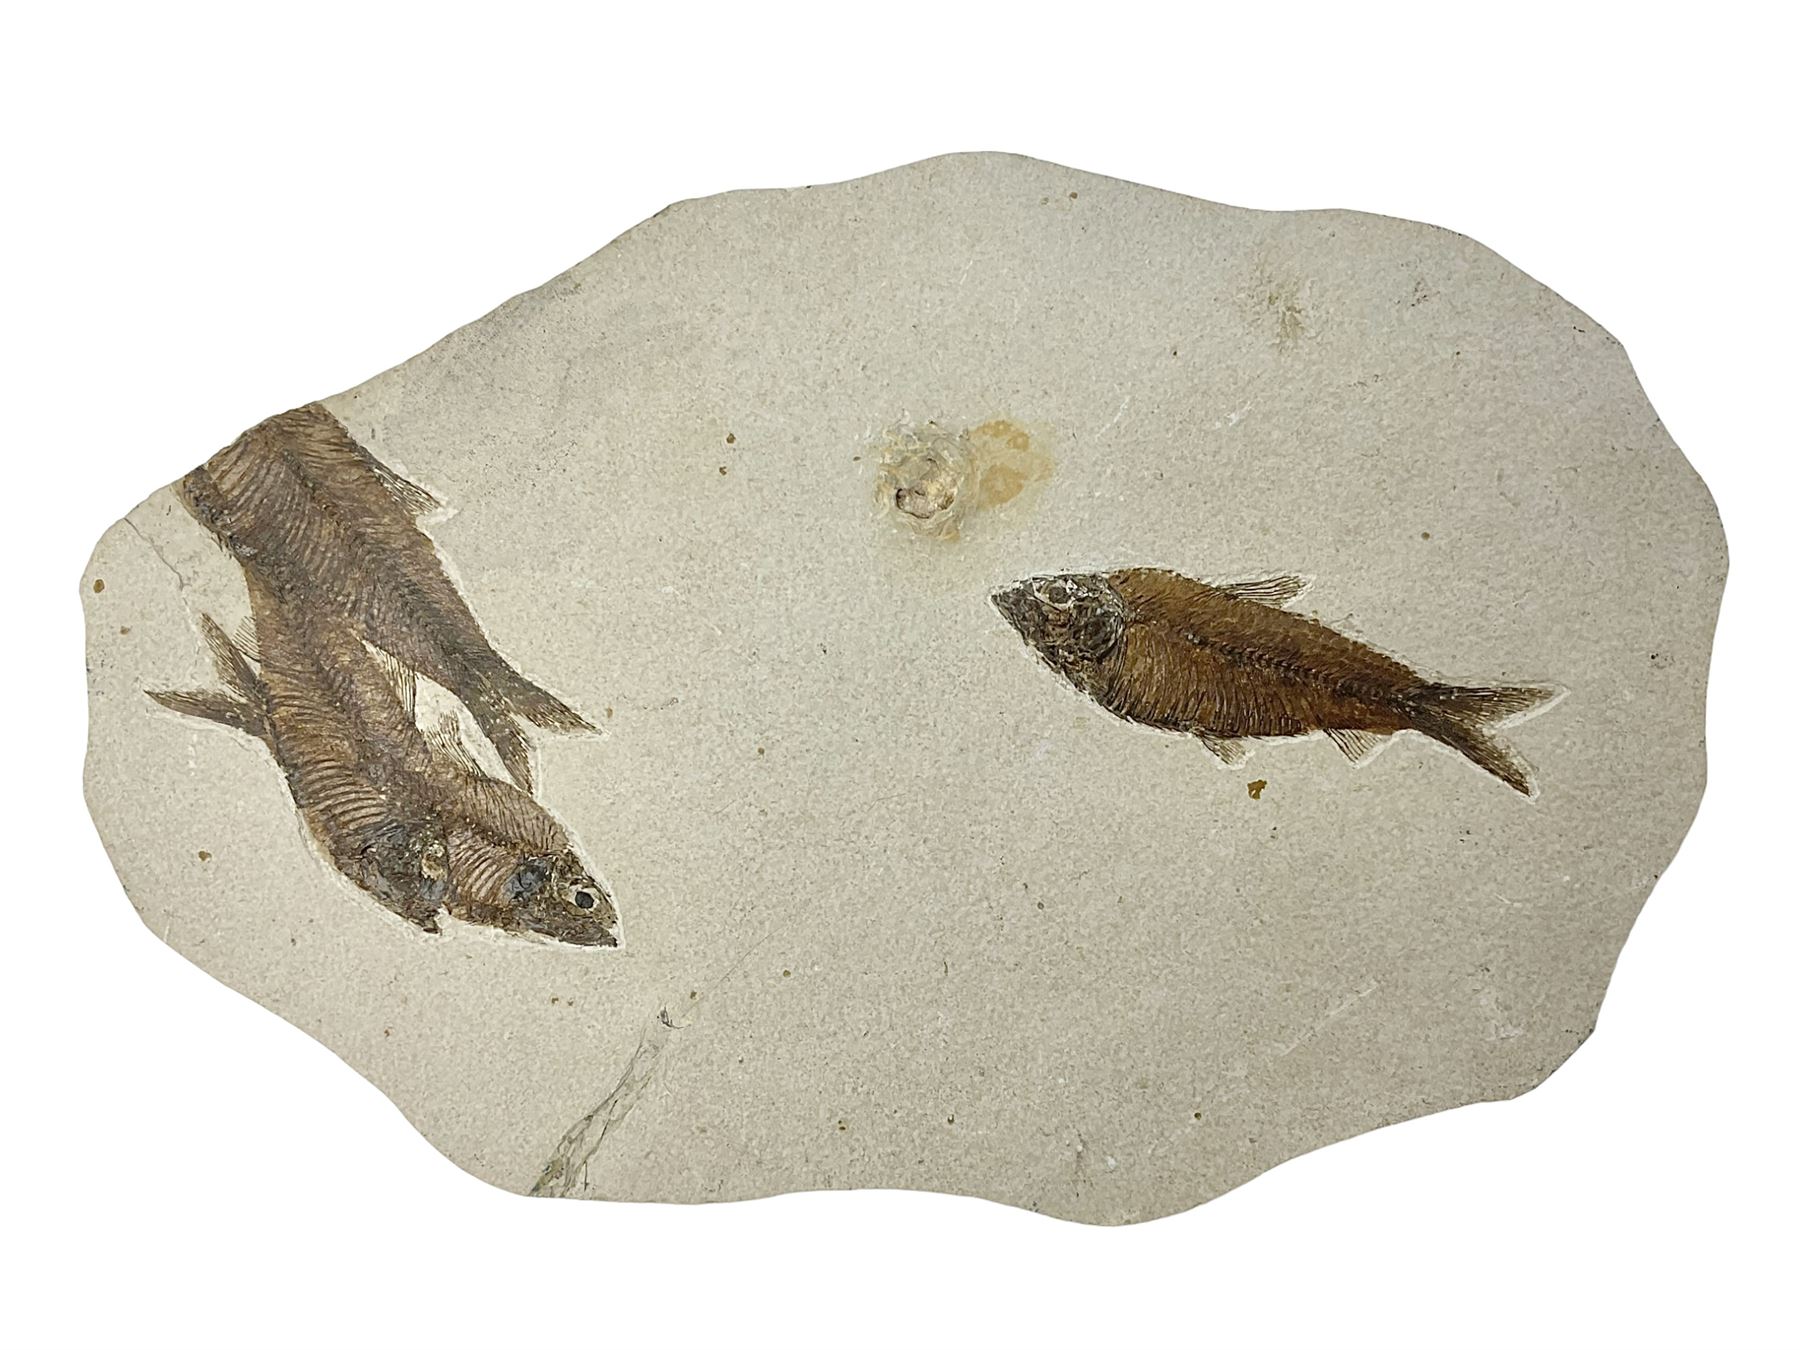 Four fossilised fish (Knightia alta) in a single matrix, age; Eocene  period, location; Green River Formation, Wyoming, USA, matrix H25cm, L31cm  - Fossils, Minerals & Natural Sciences